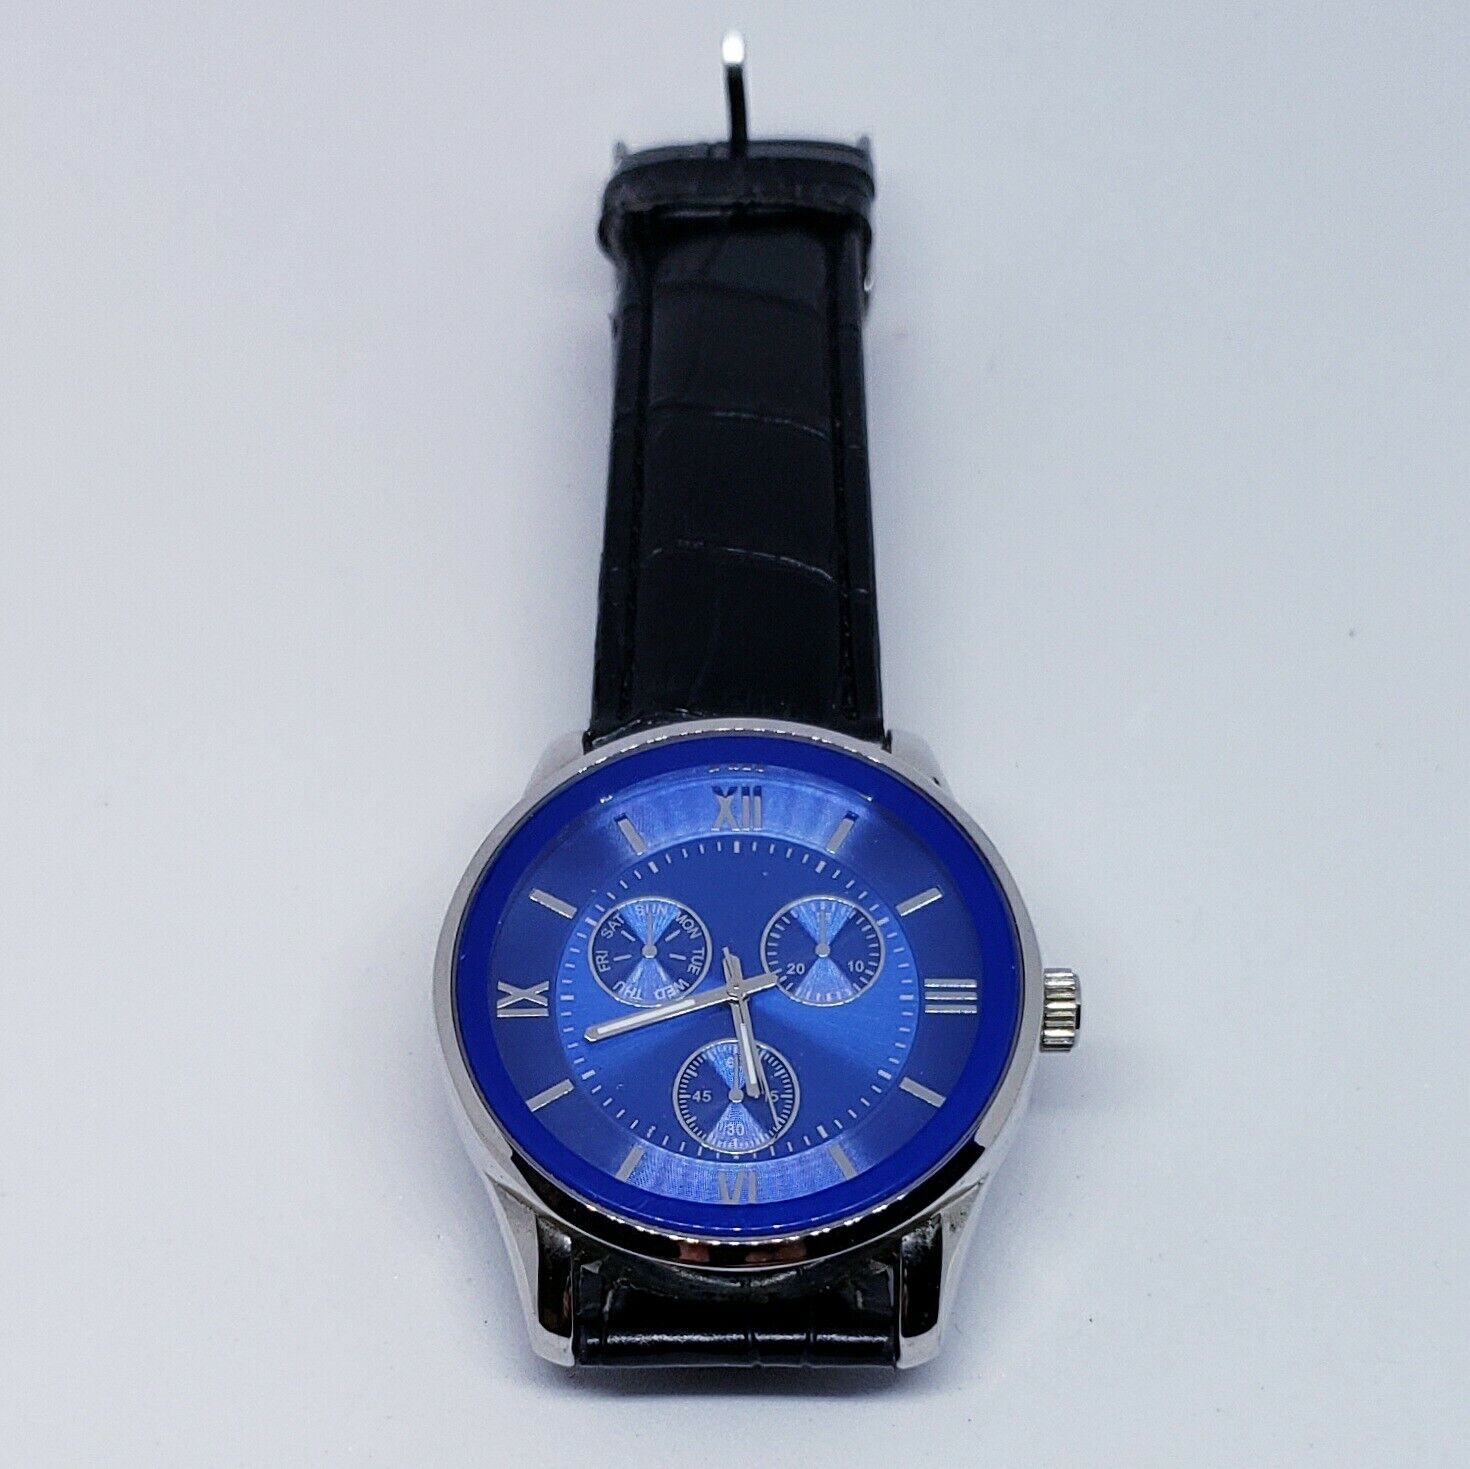 Elegant MERONA Men's Wrist Watch - Roman Numerals - Blue Face - FMDM244